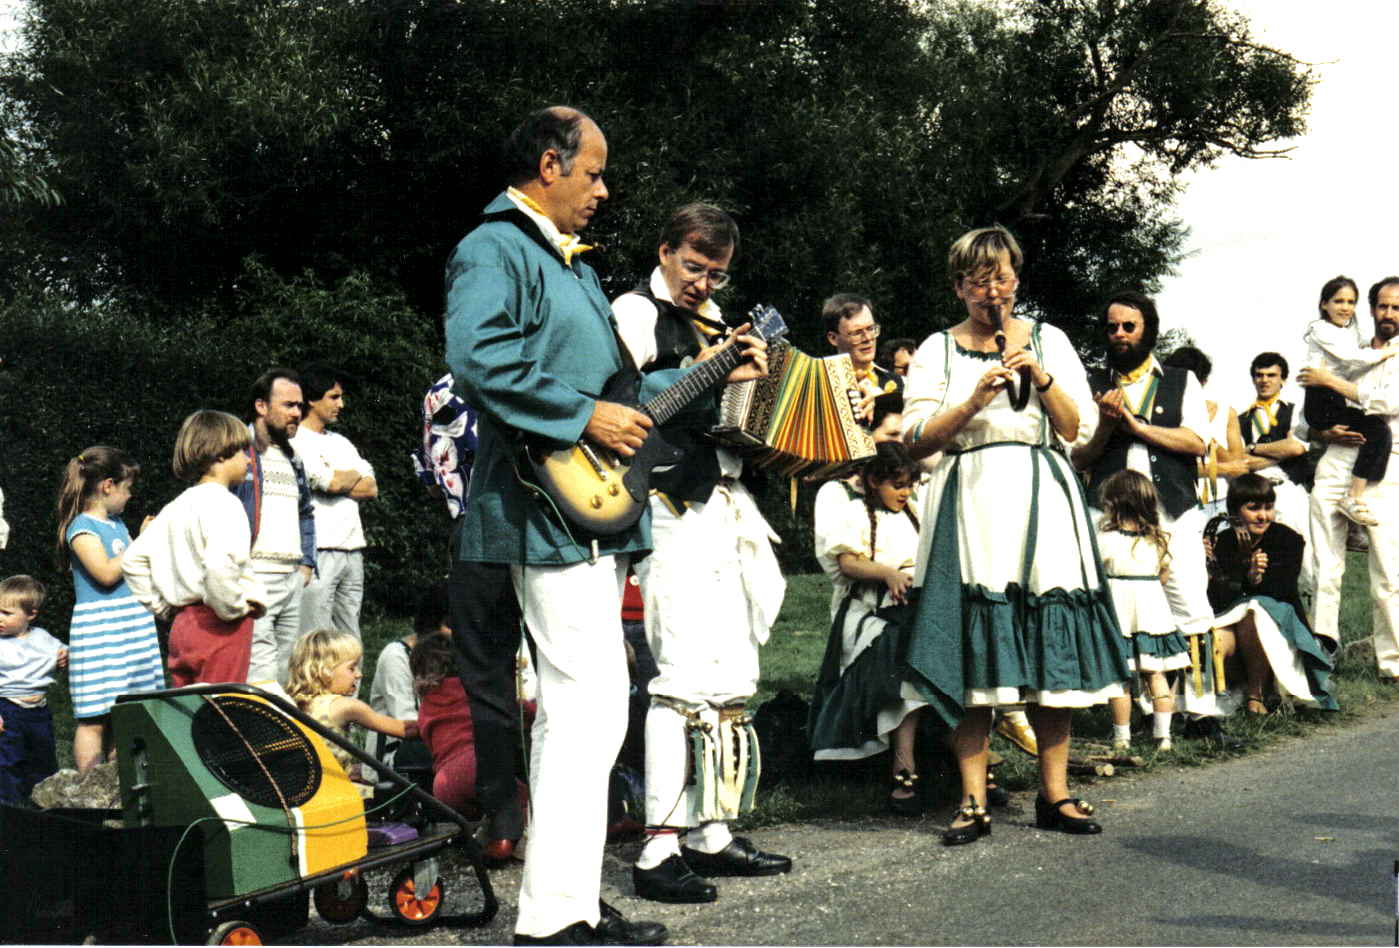 Stephen Giles band practice, 1968